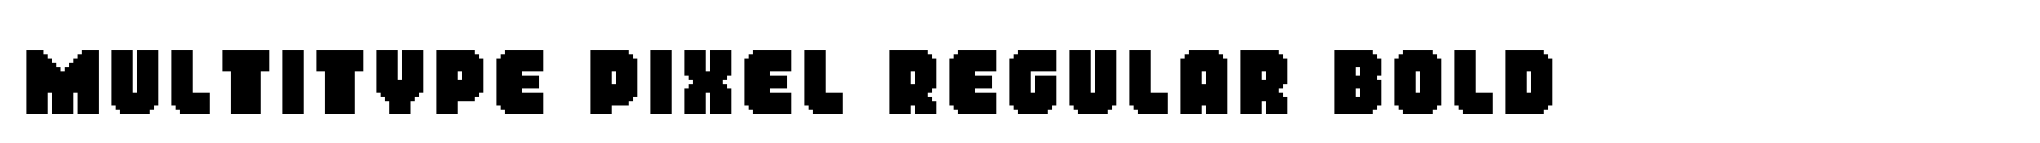 MultiType Pixel Regular Bold image